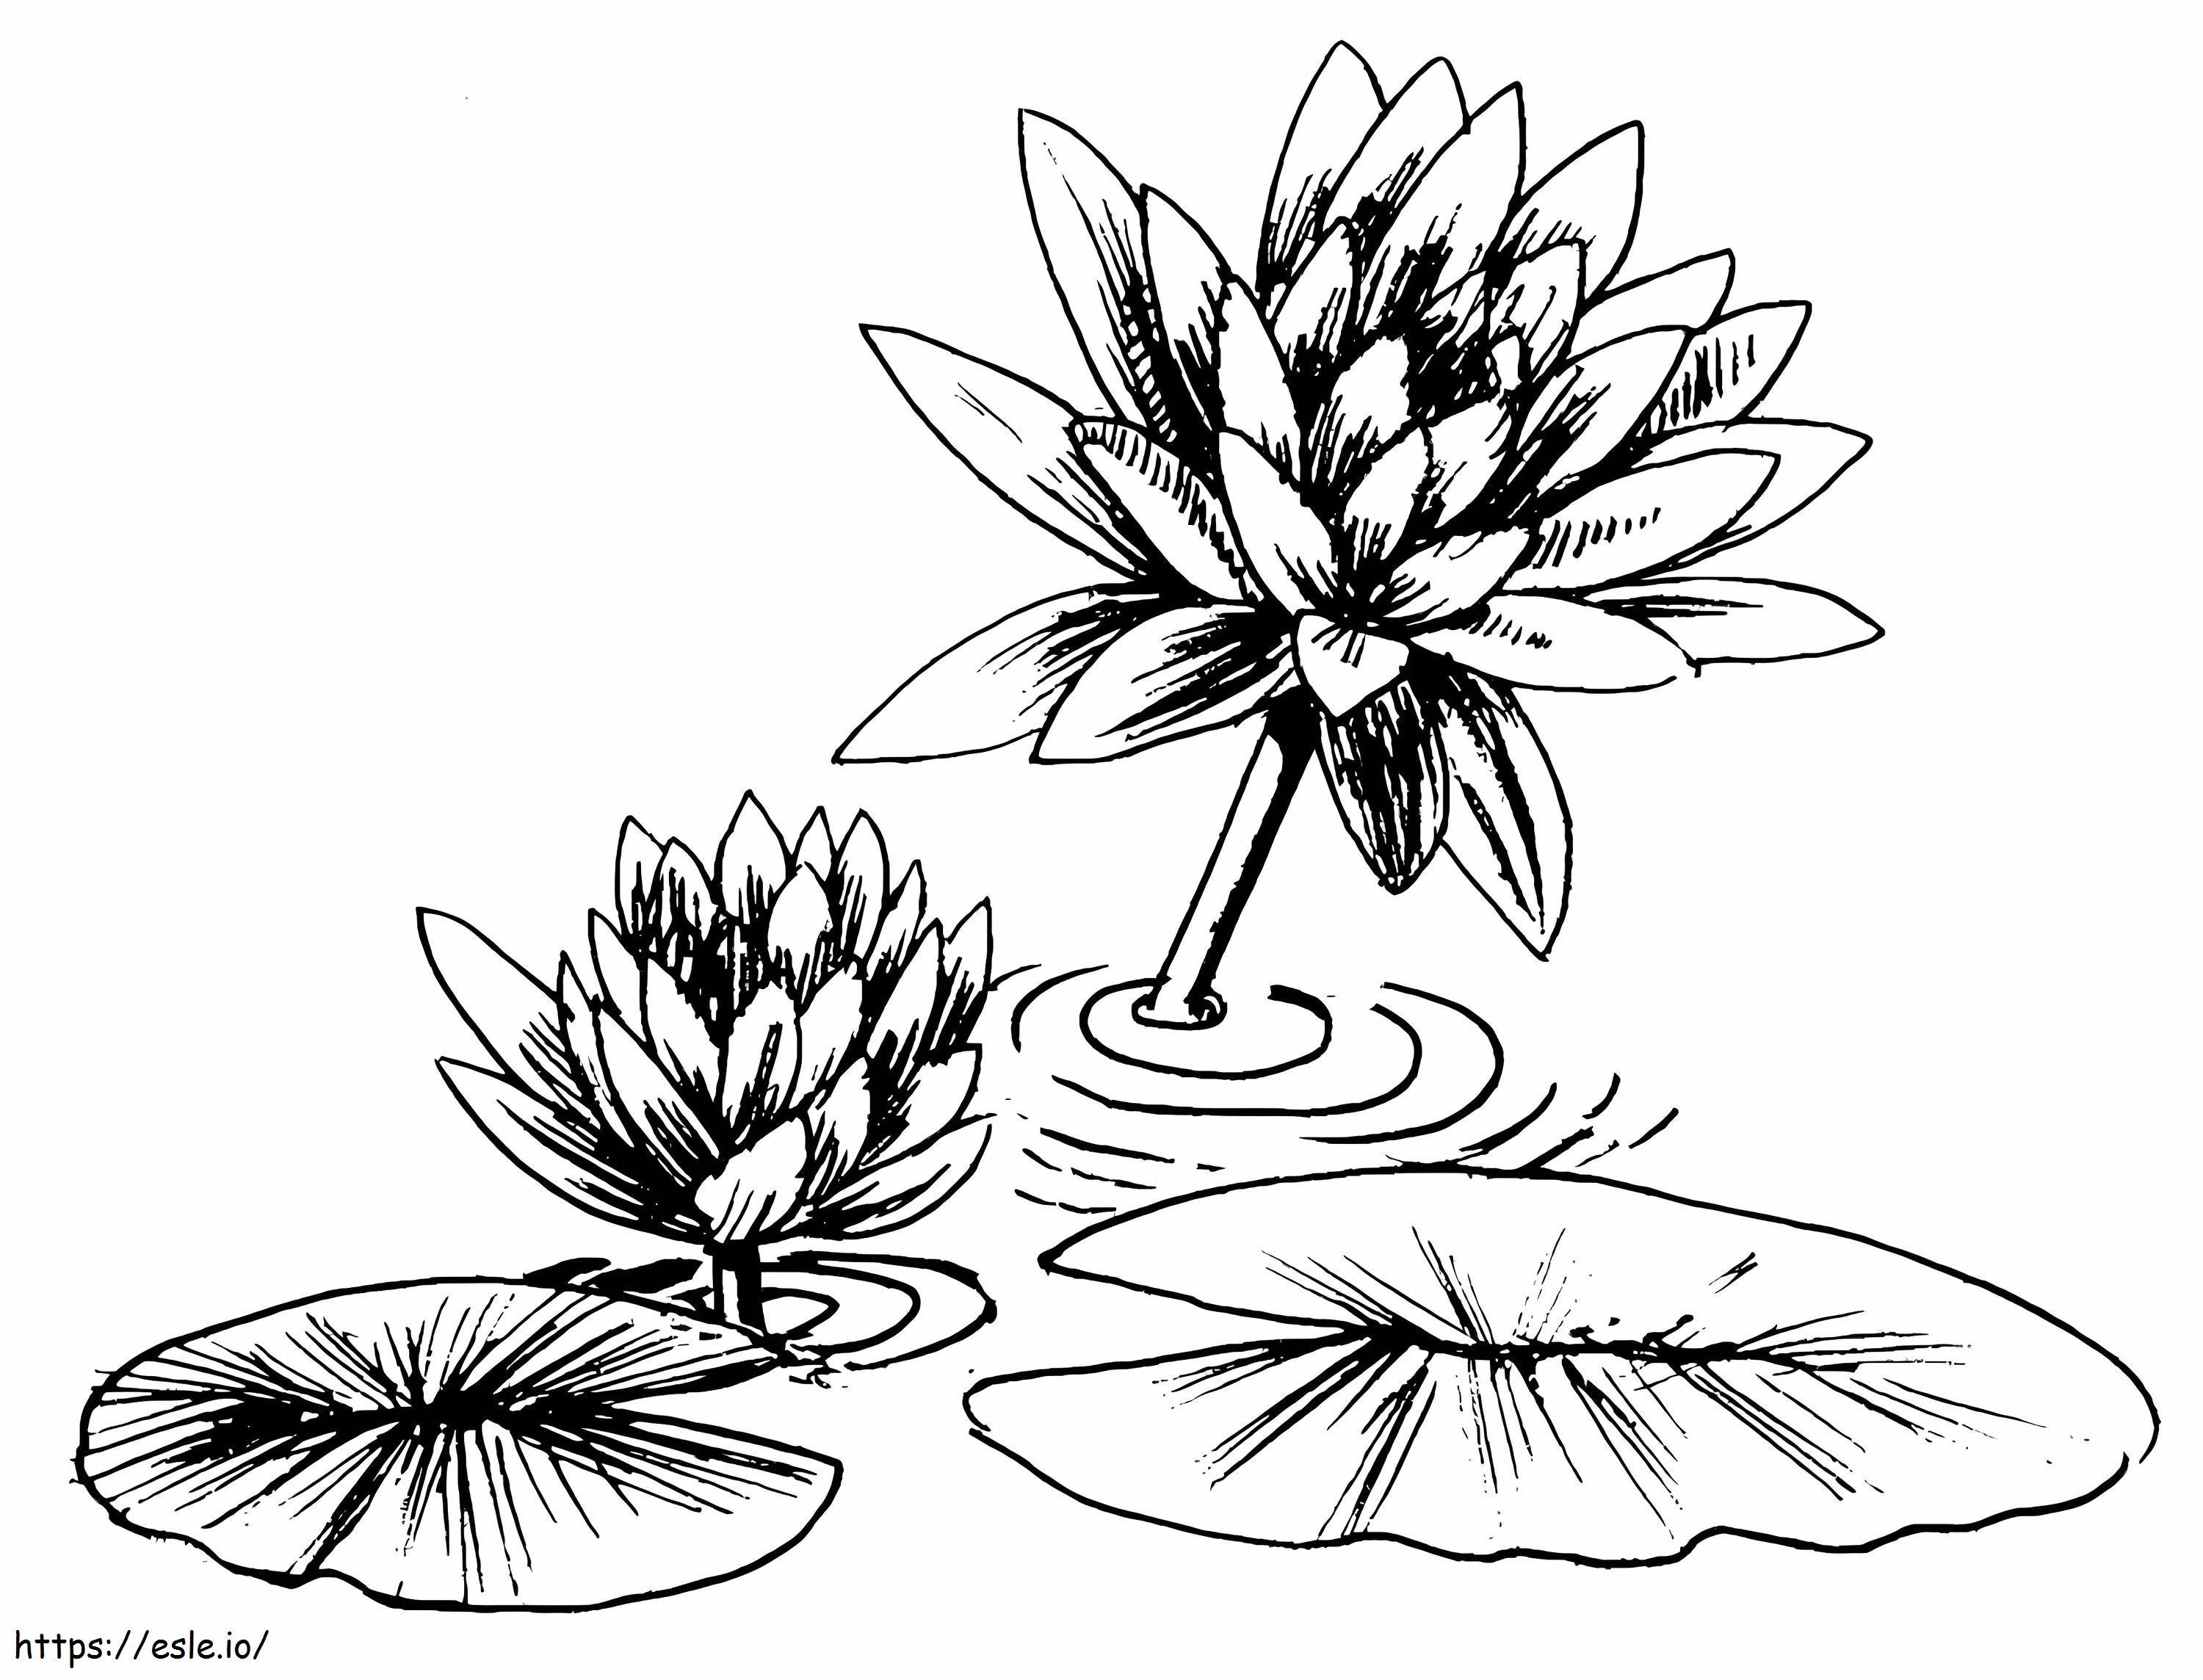 Seerosenblume 2 ausmalbilder